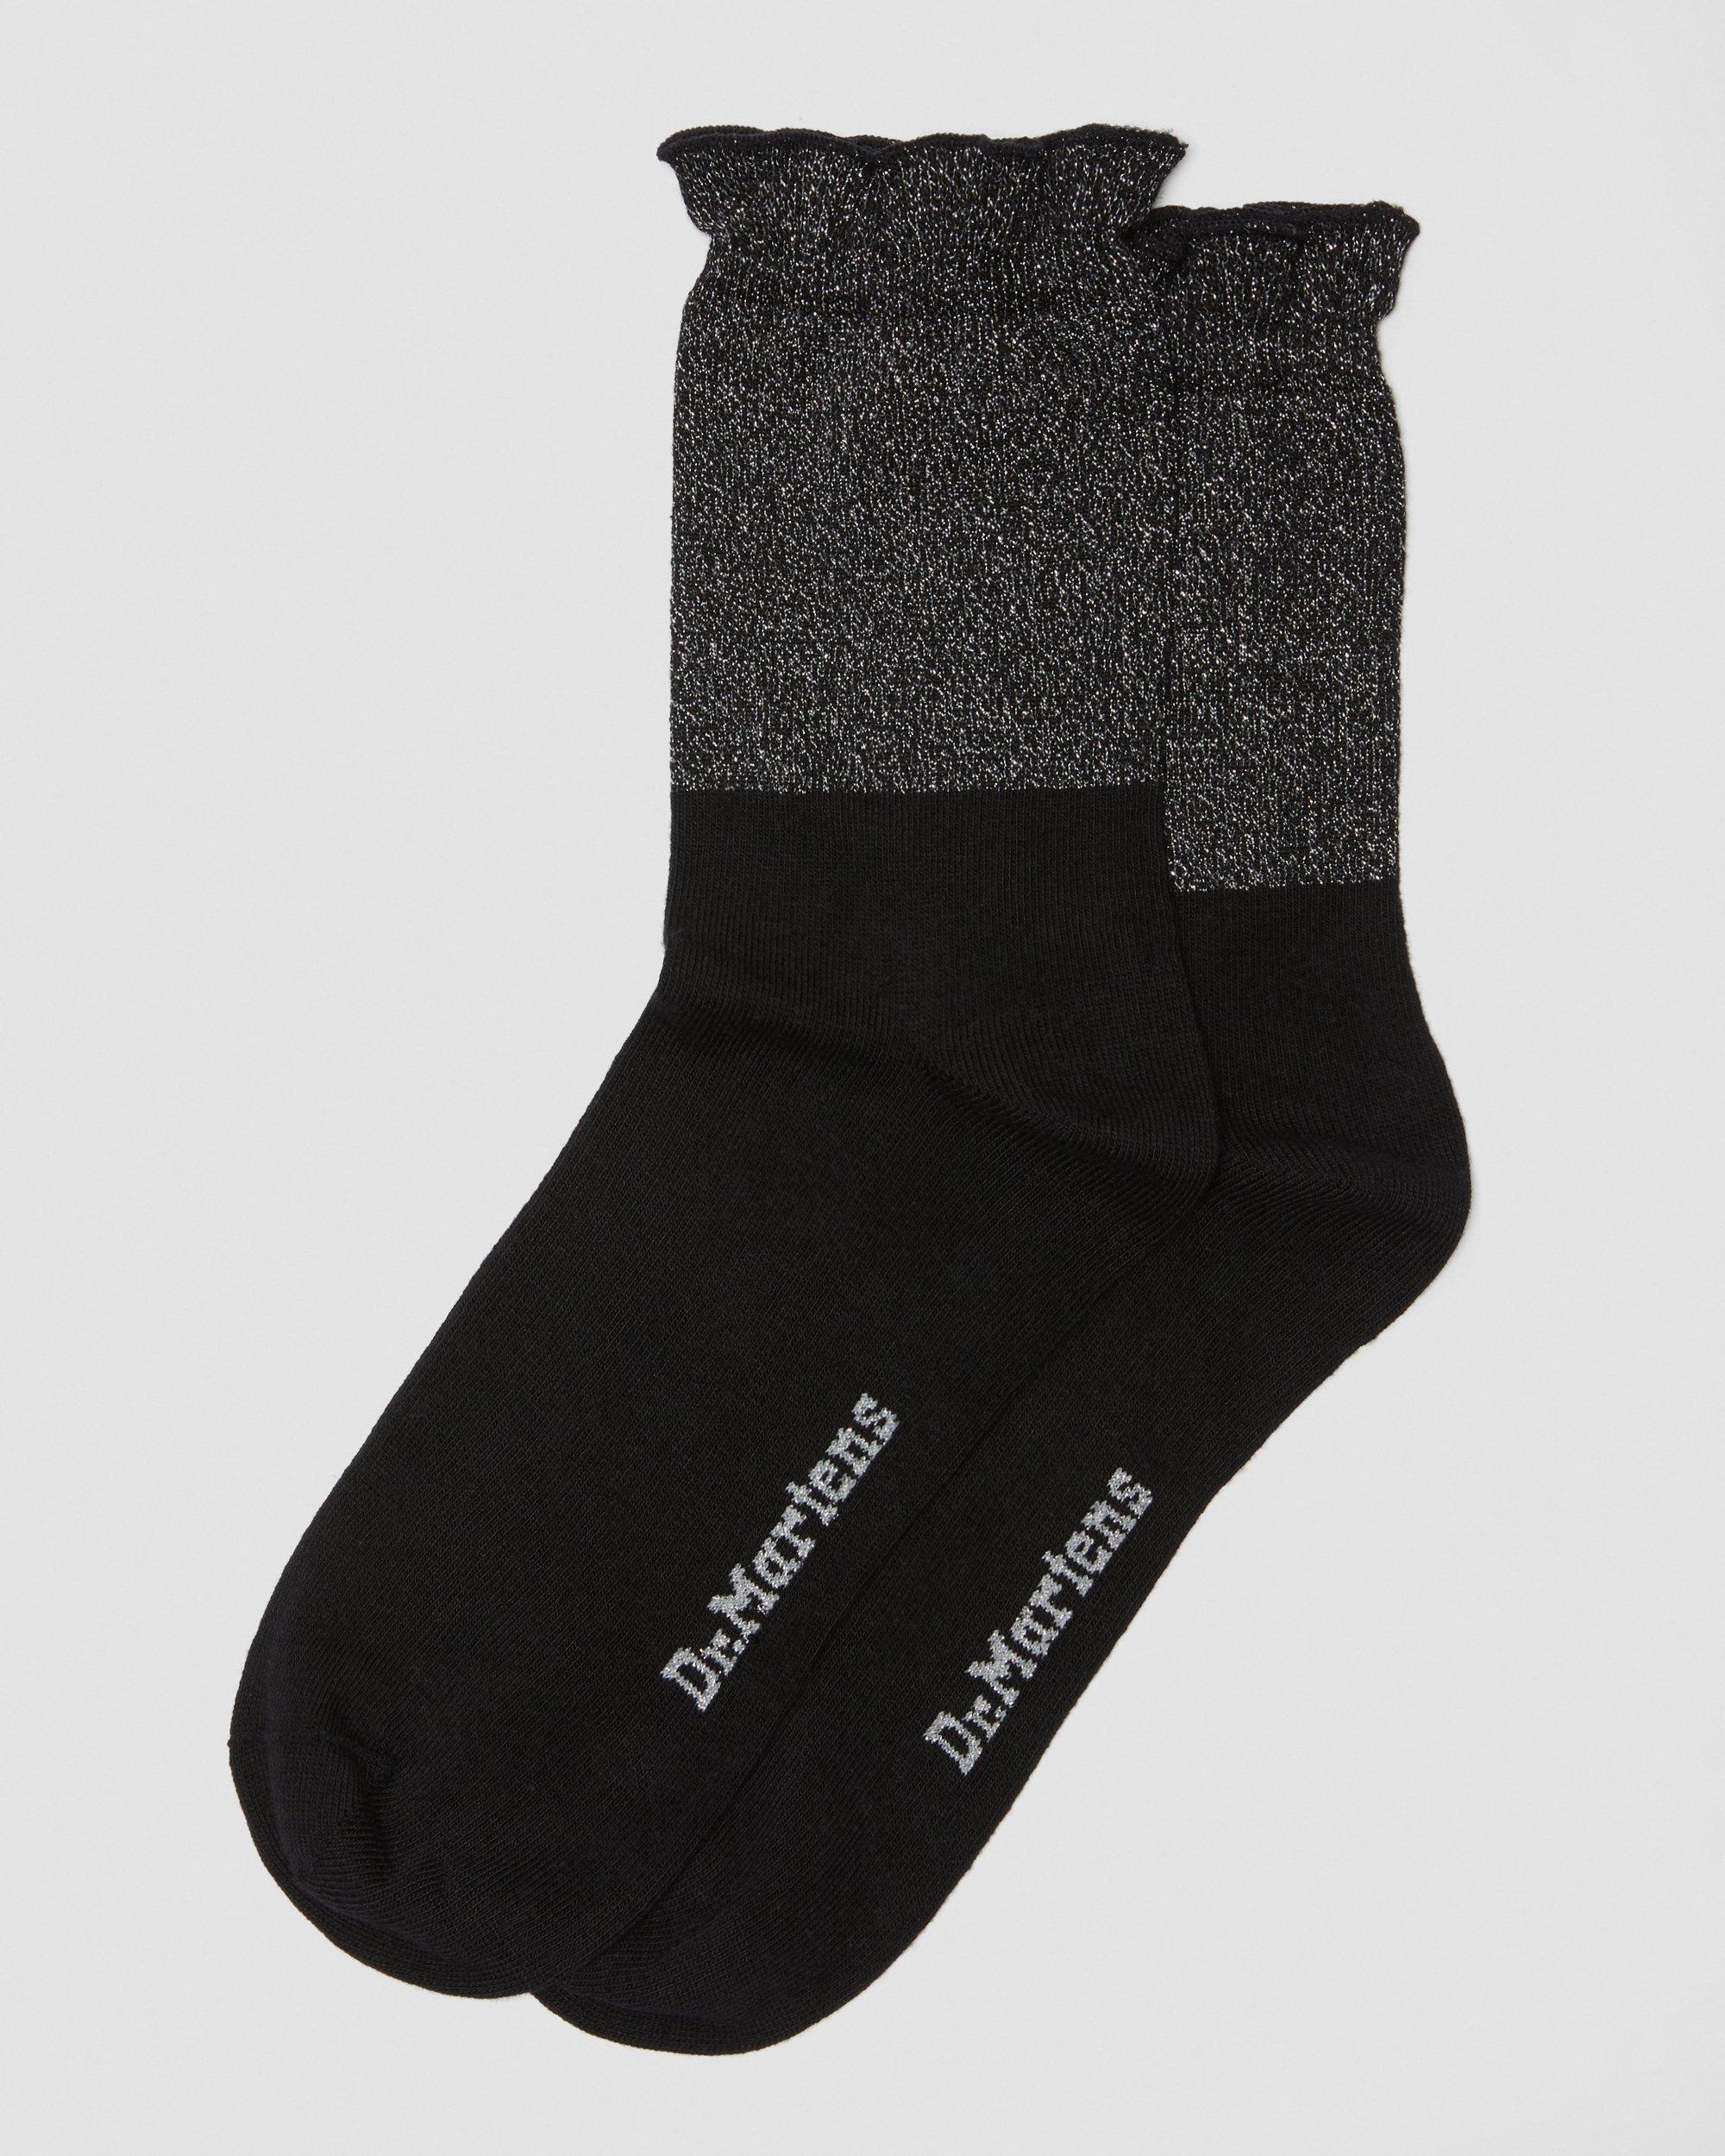 Iridescent Socks in Black | Dr. Martens